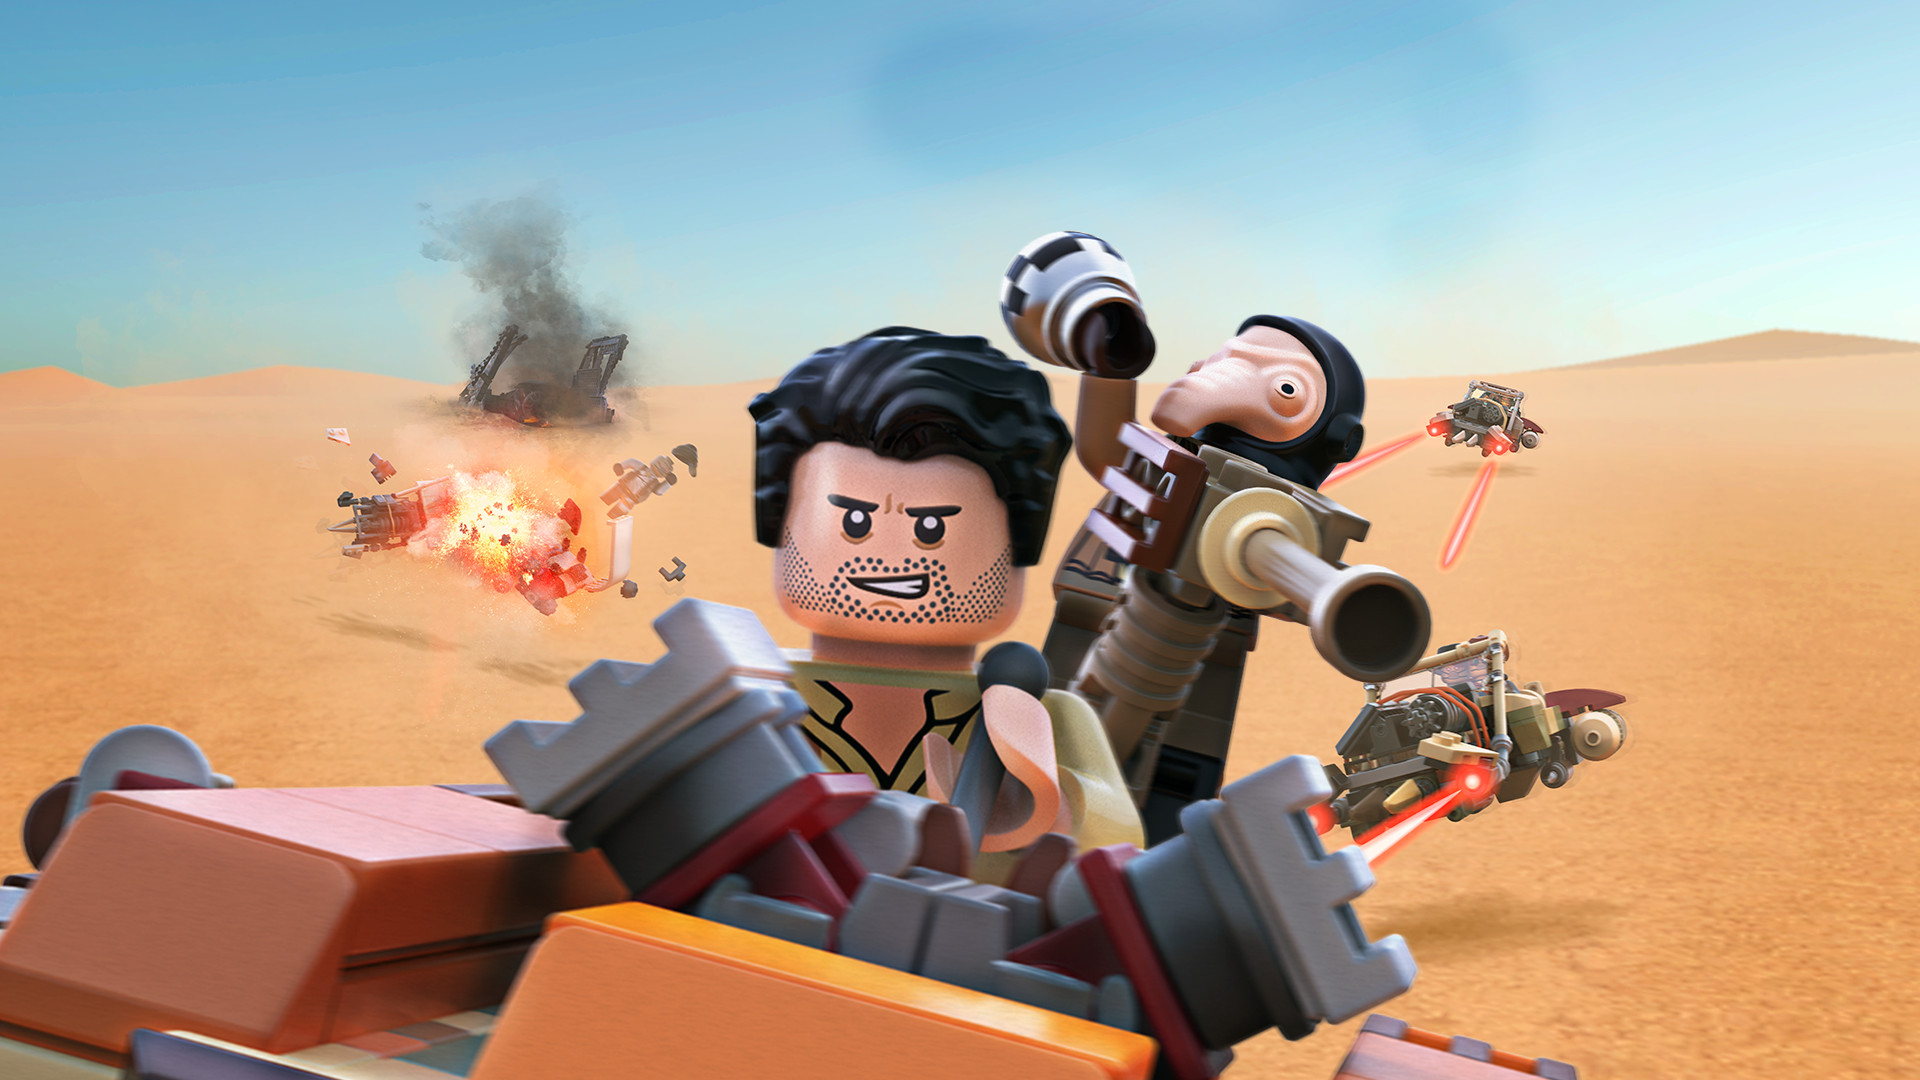 [$ 2.25] LEGO Star Wars: The Force Awakens - Jakku: Poe's Quest for Survival DLC Steam CD Key